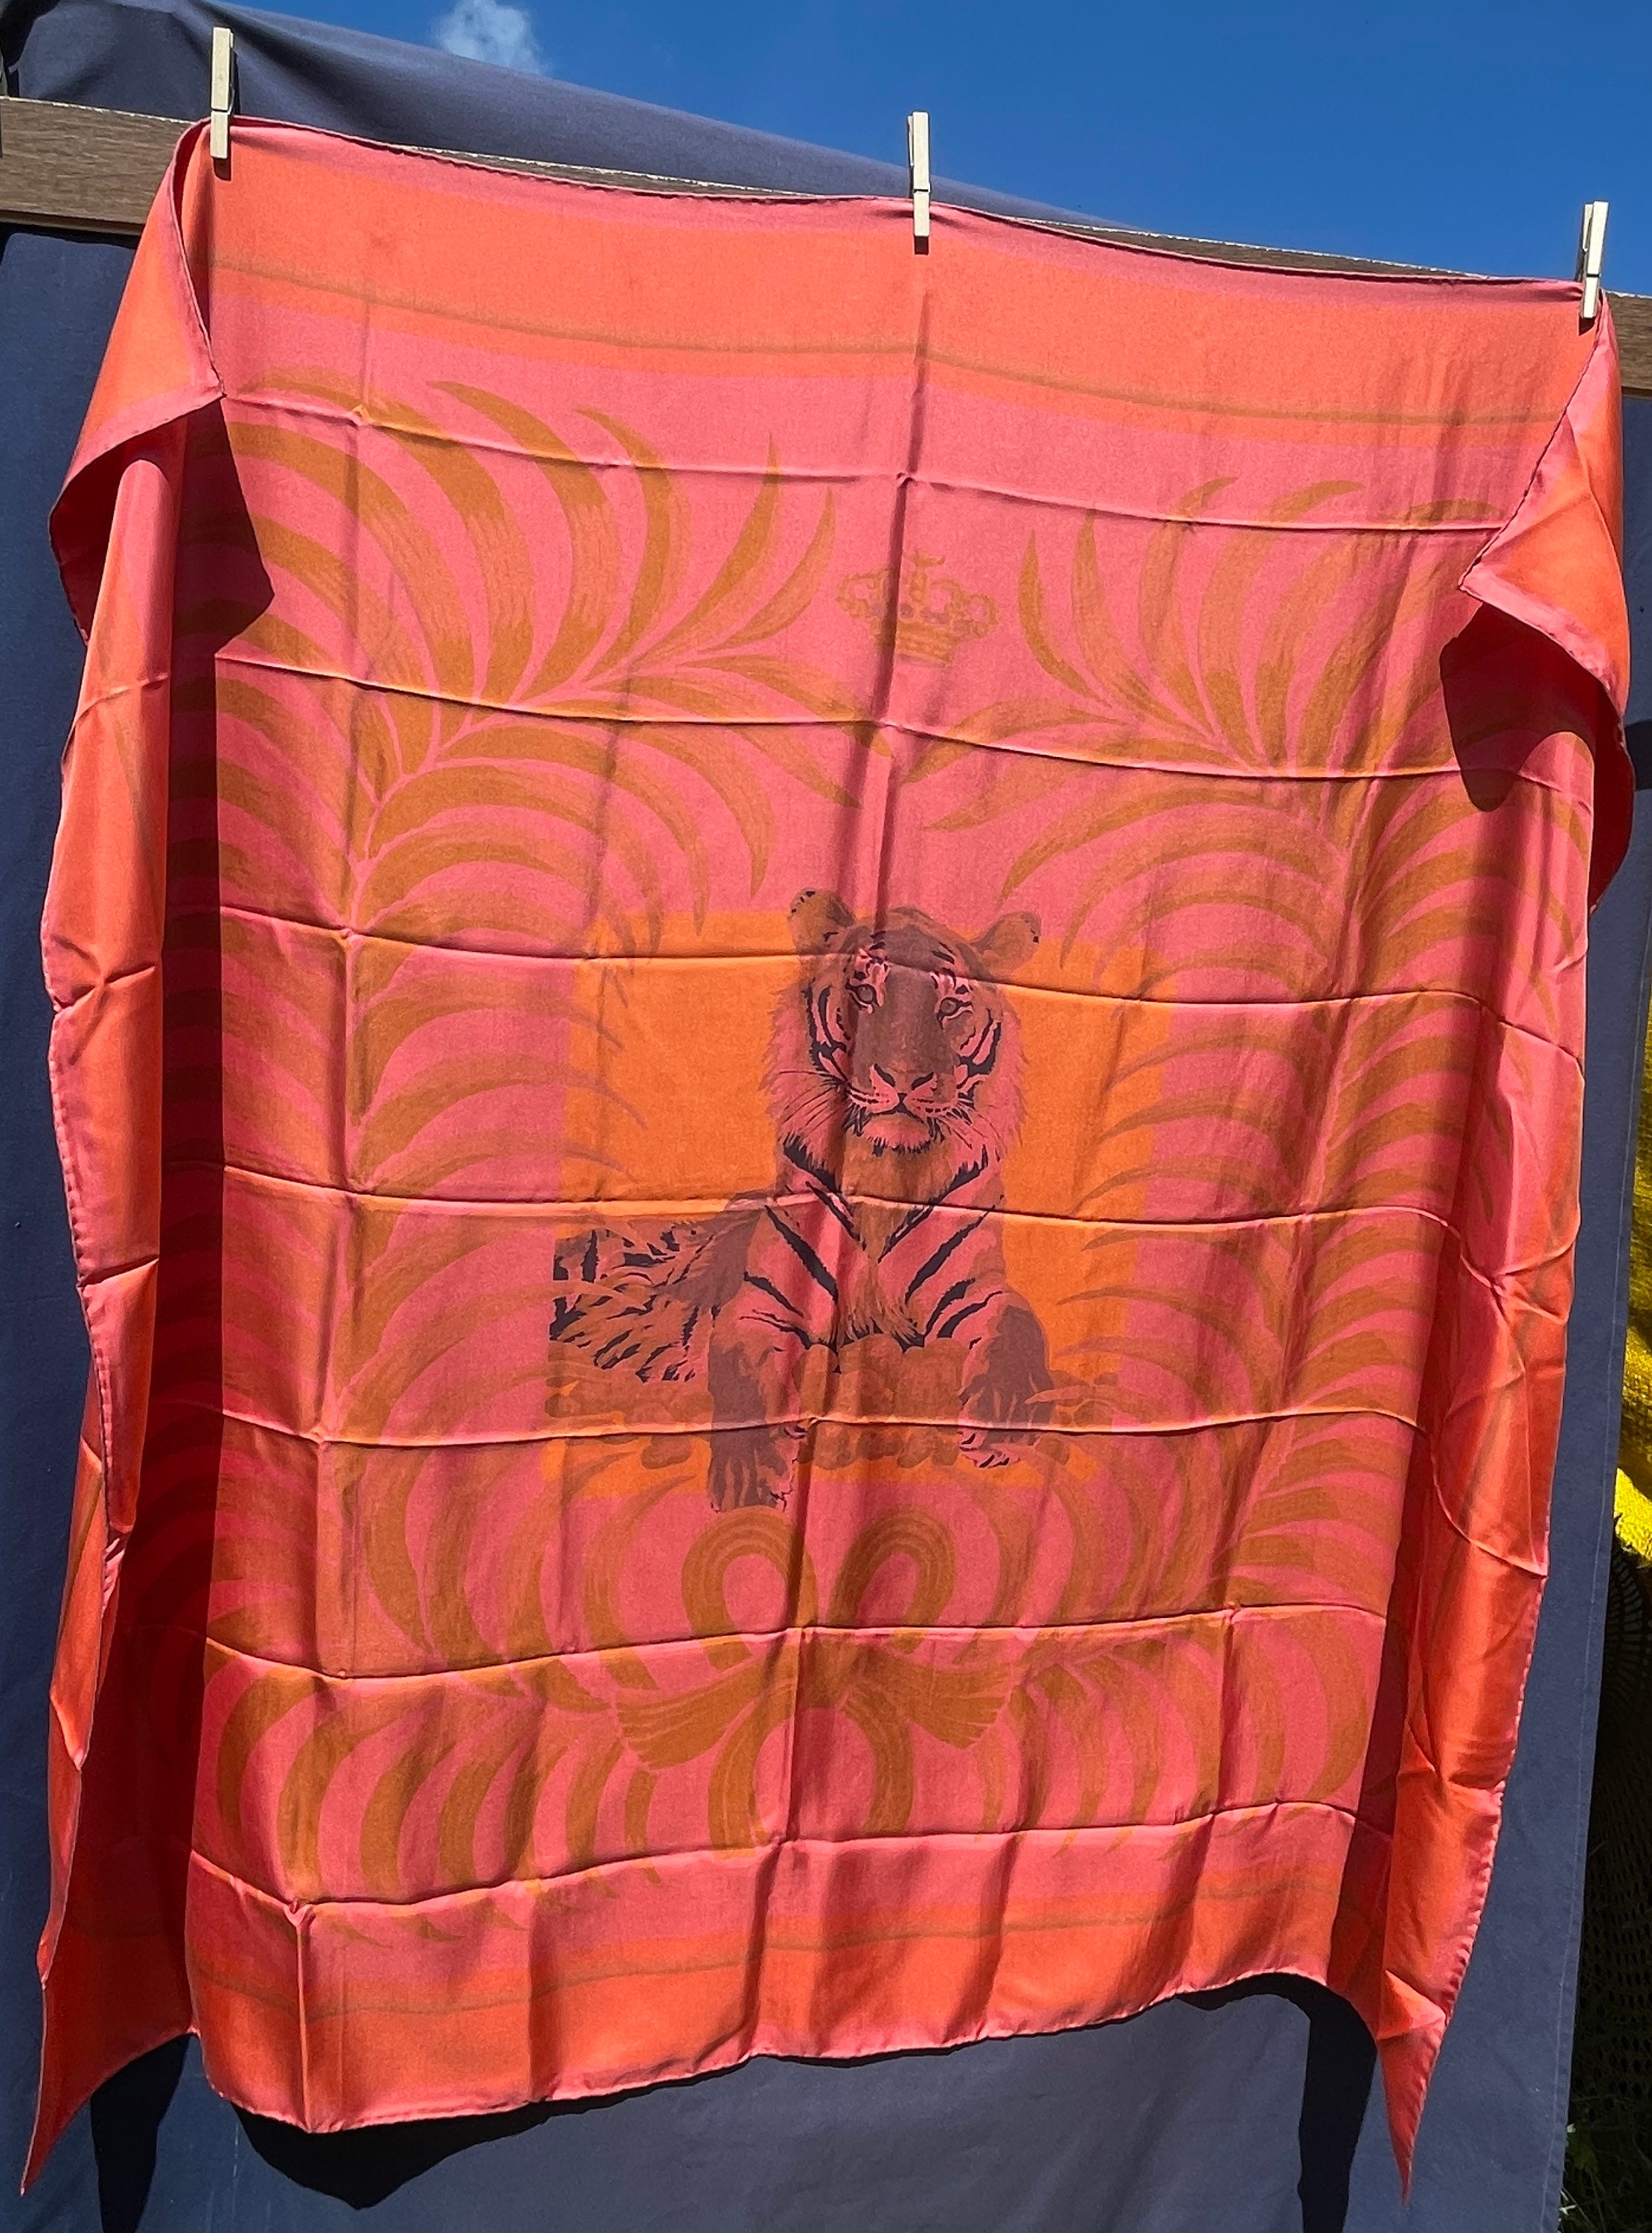 Hermes Dip Dye Tigre Royale Surteint Indian Rose Orange 